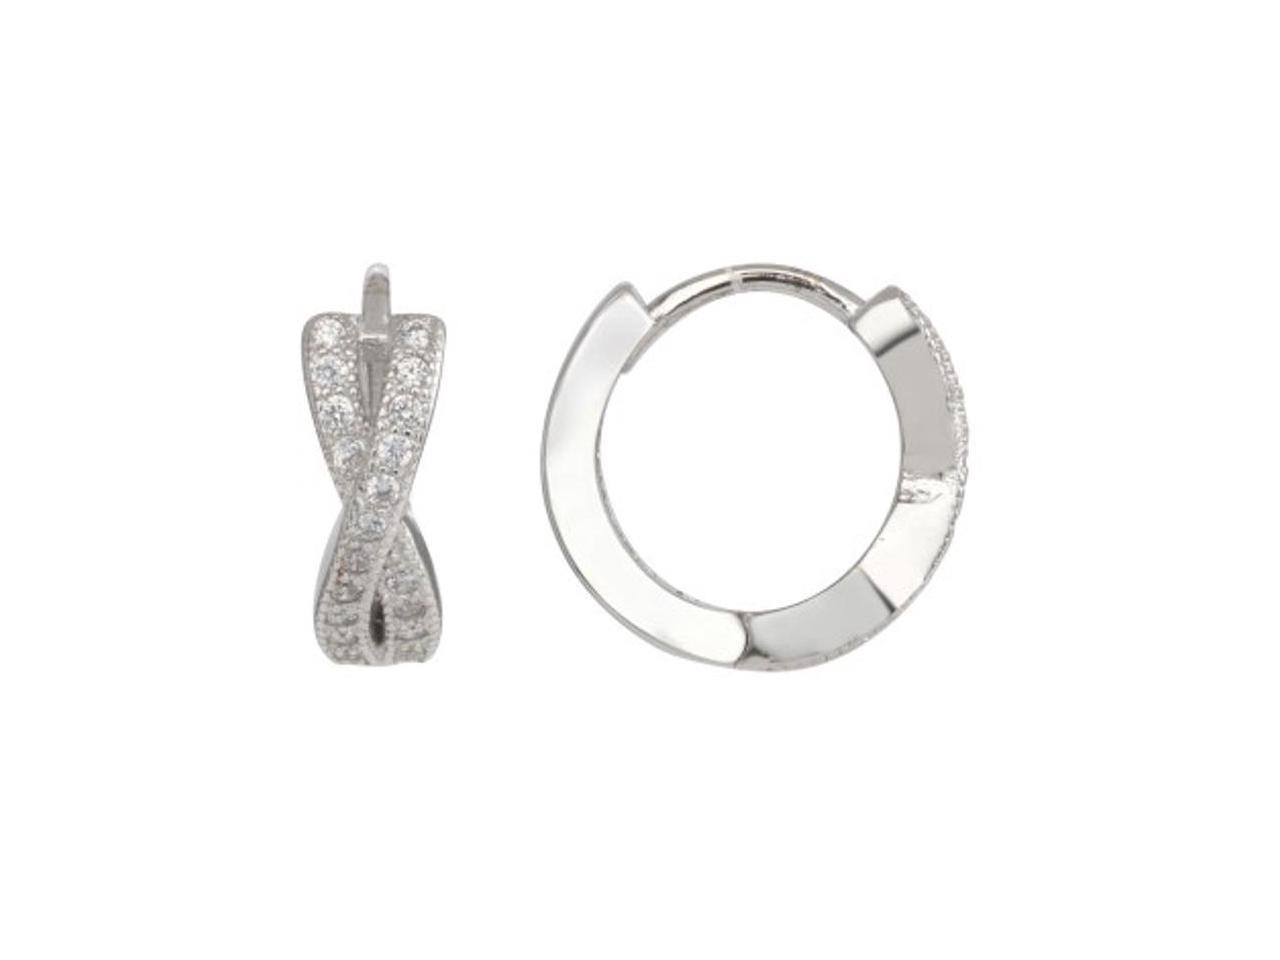 Wedding Band 4 mm Glitzs Jewels 925 Sterling Silver Hollow Hoop Earrings for Women in Gift Box 